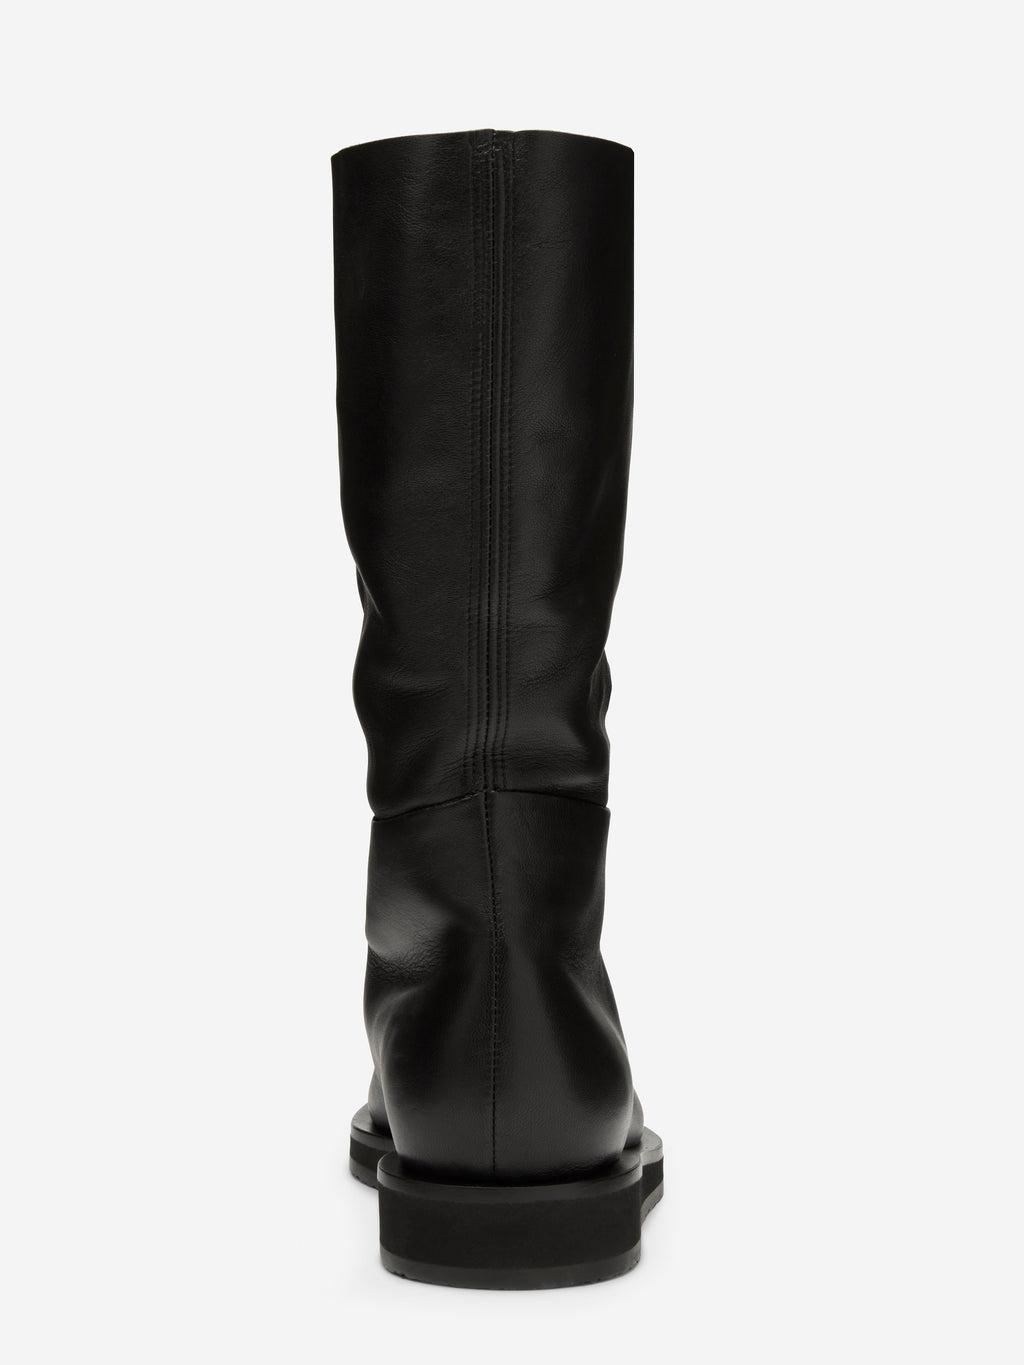 Tamara Mellon Sunday Morning Mid-calf Boots in Black | Lyst